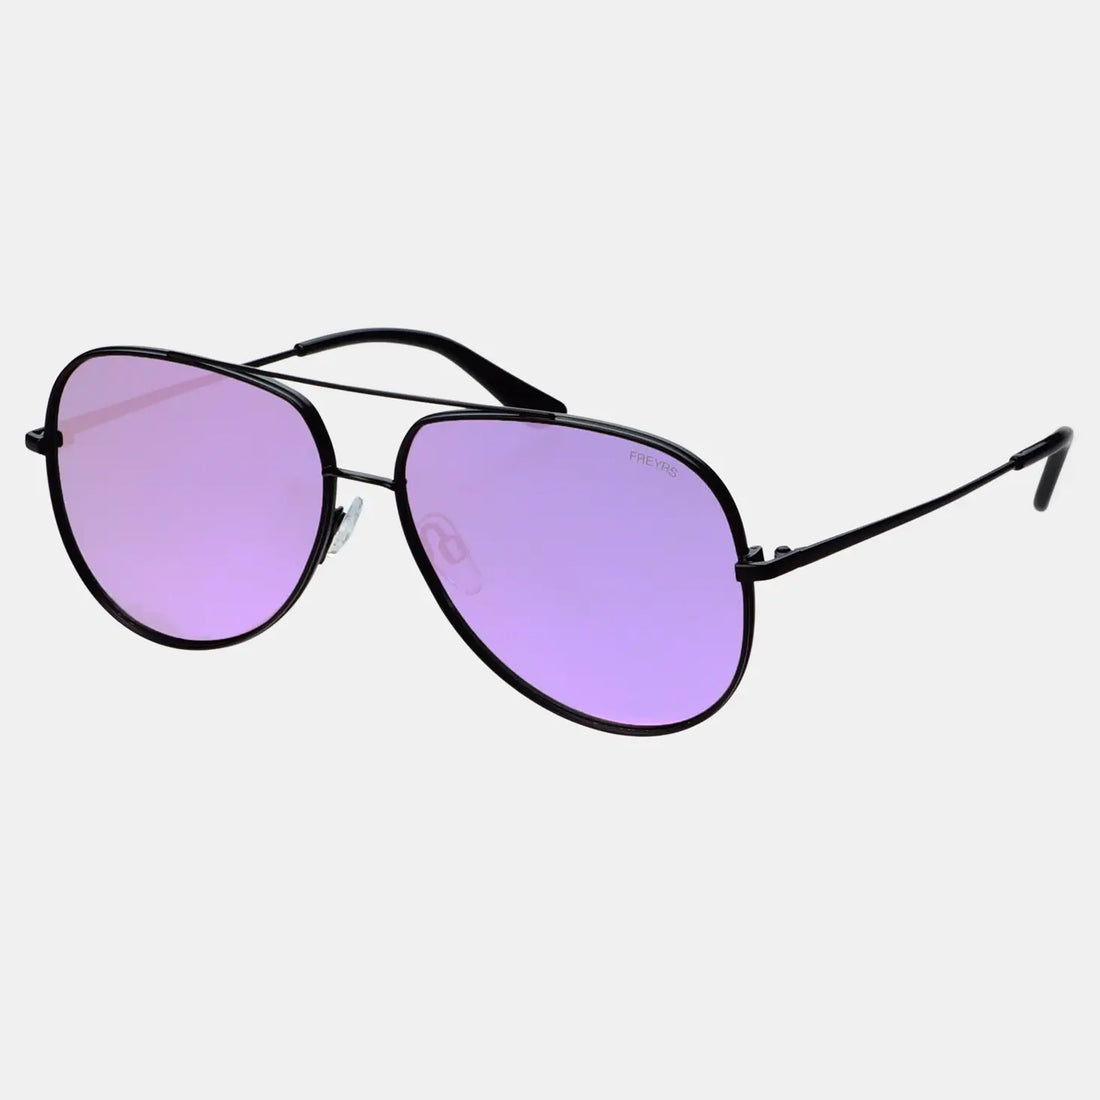 Freyrs Aviator Sunglasses - Max